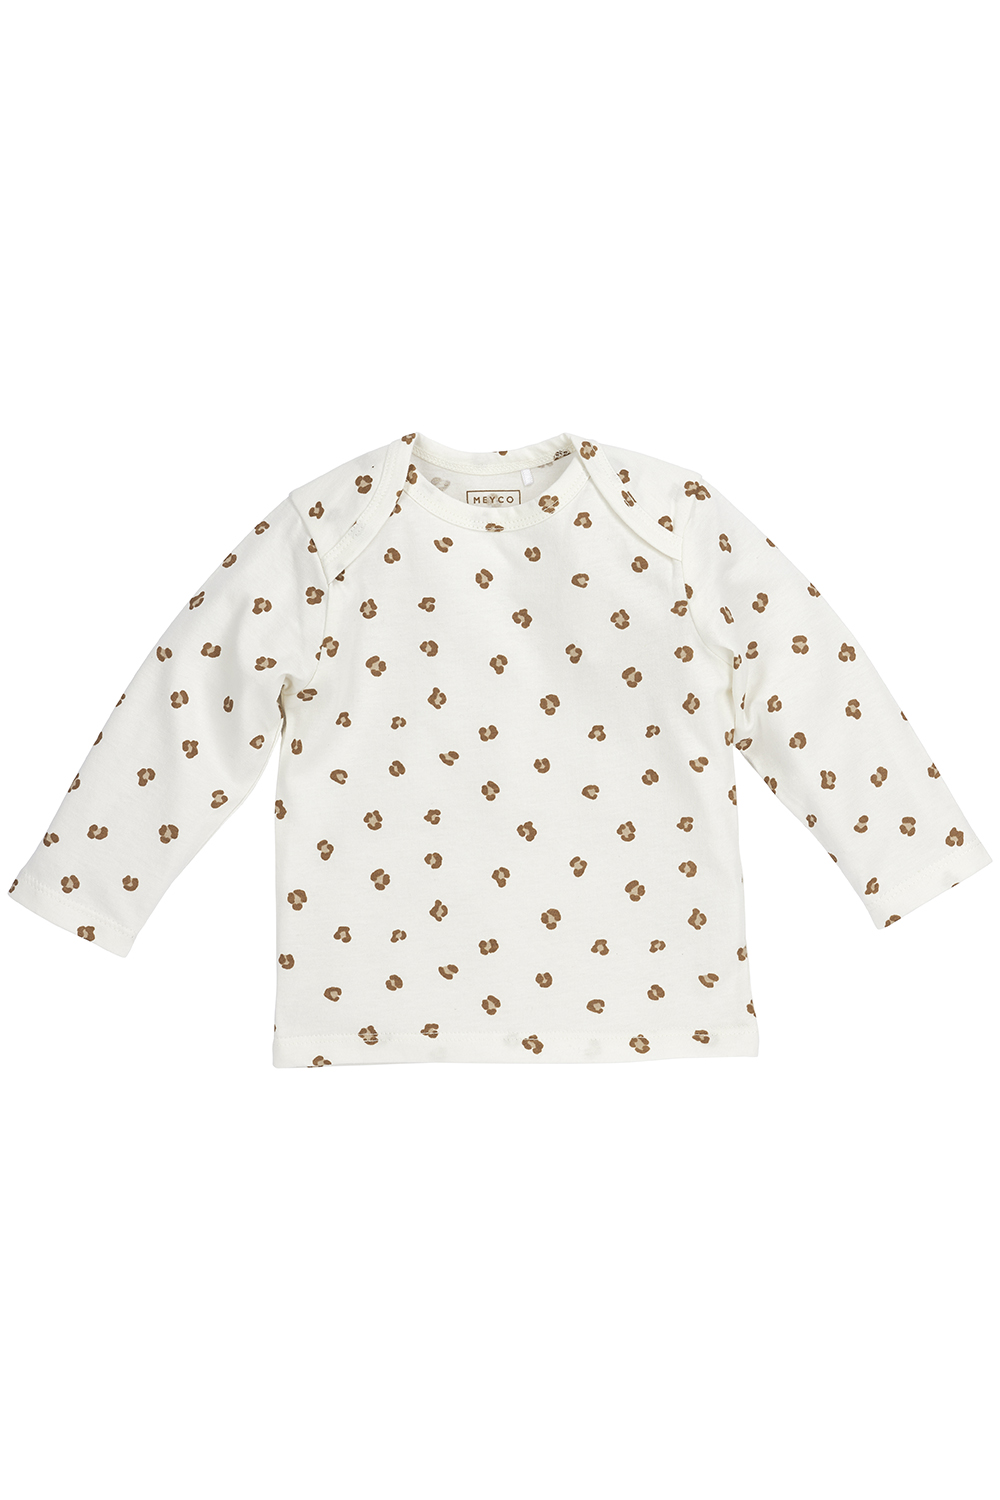 Baby Pyjama 2-pack Mini Panther - offwhite/sand - 50/56